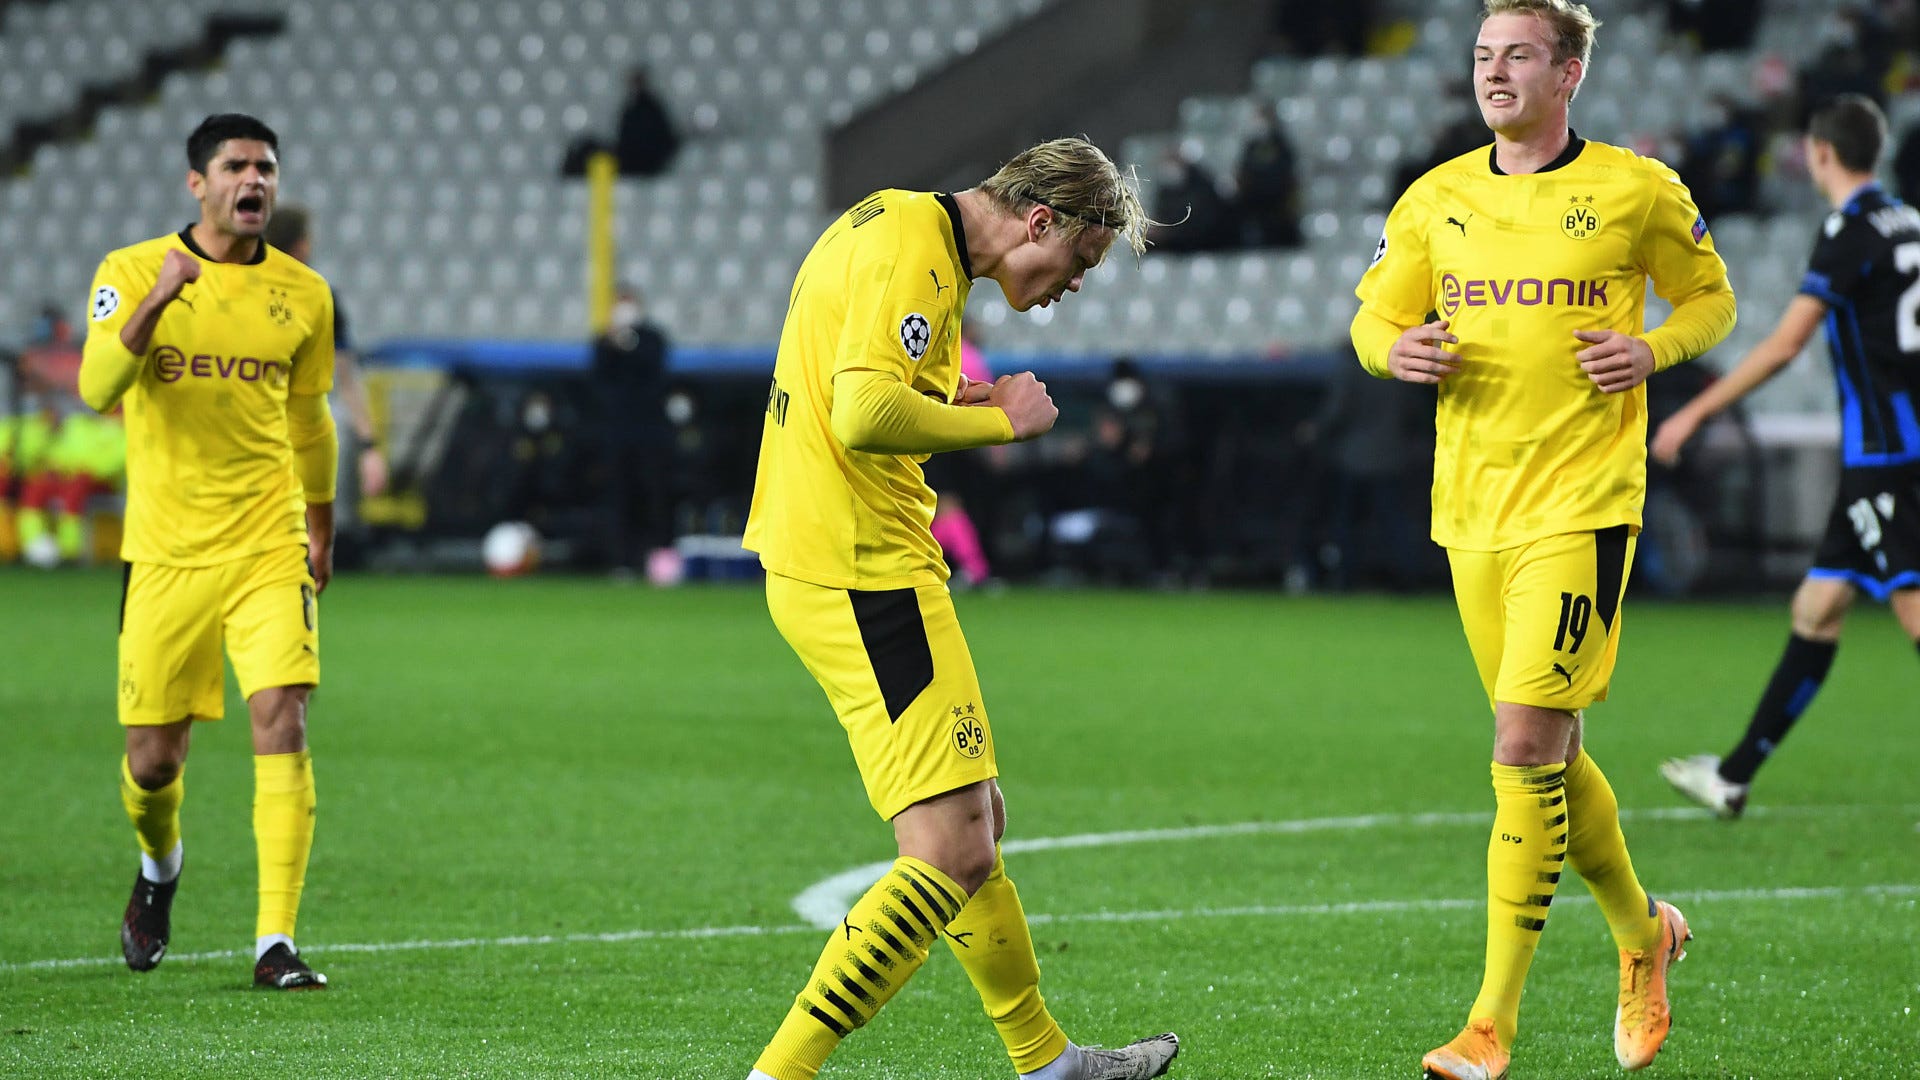 BVB (Borussia Dortmund) gegen FC Brügge heute live im Free-TV sehen